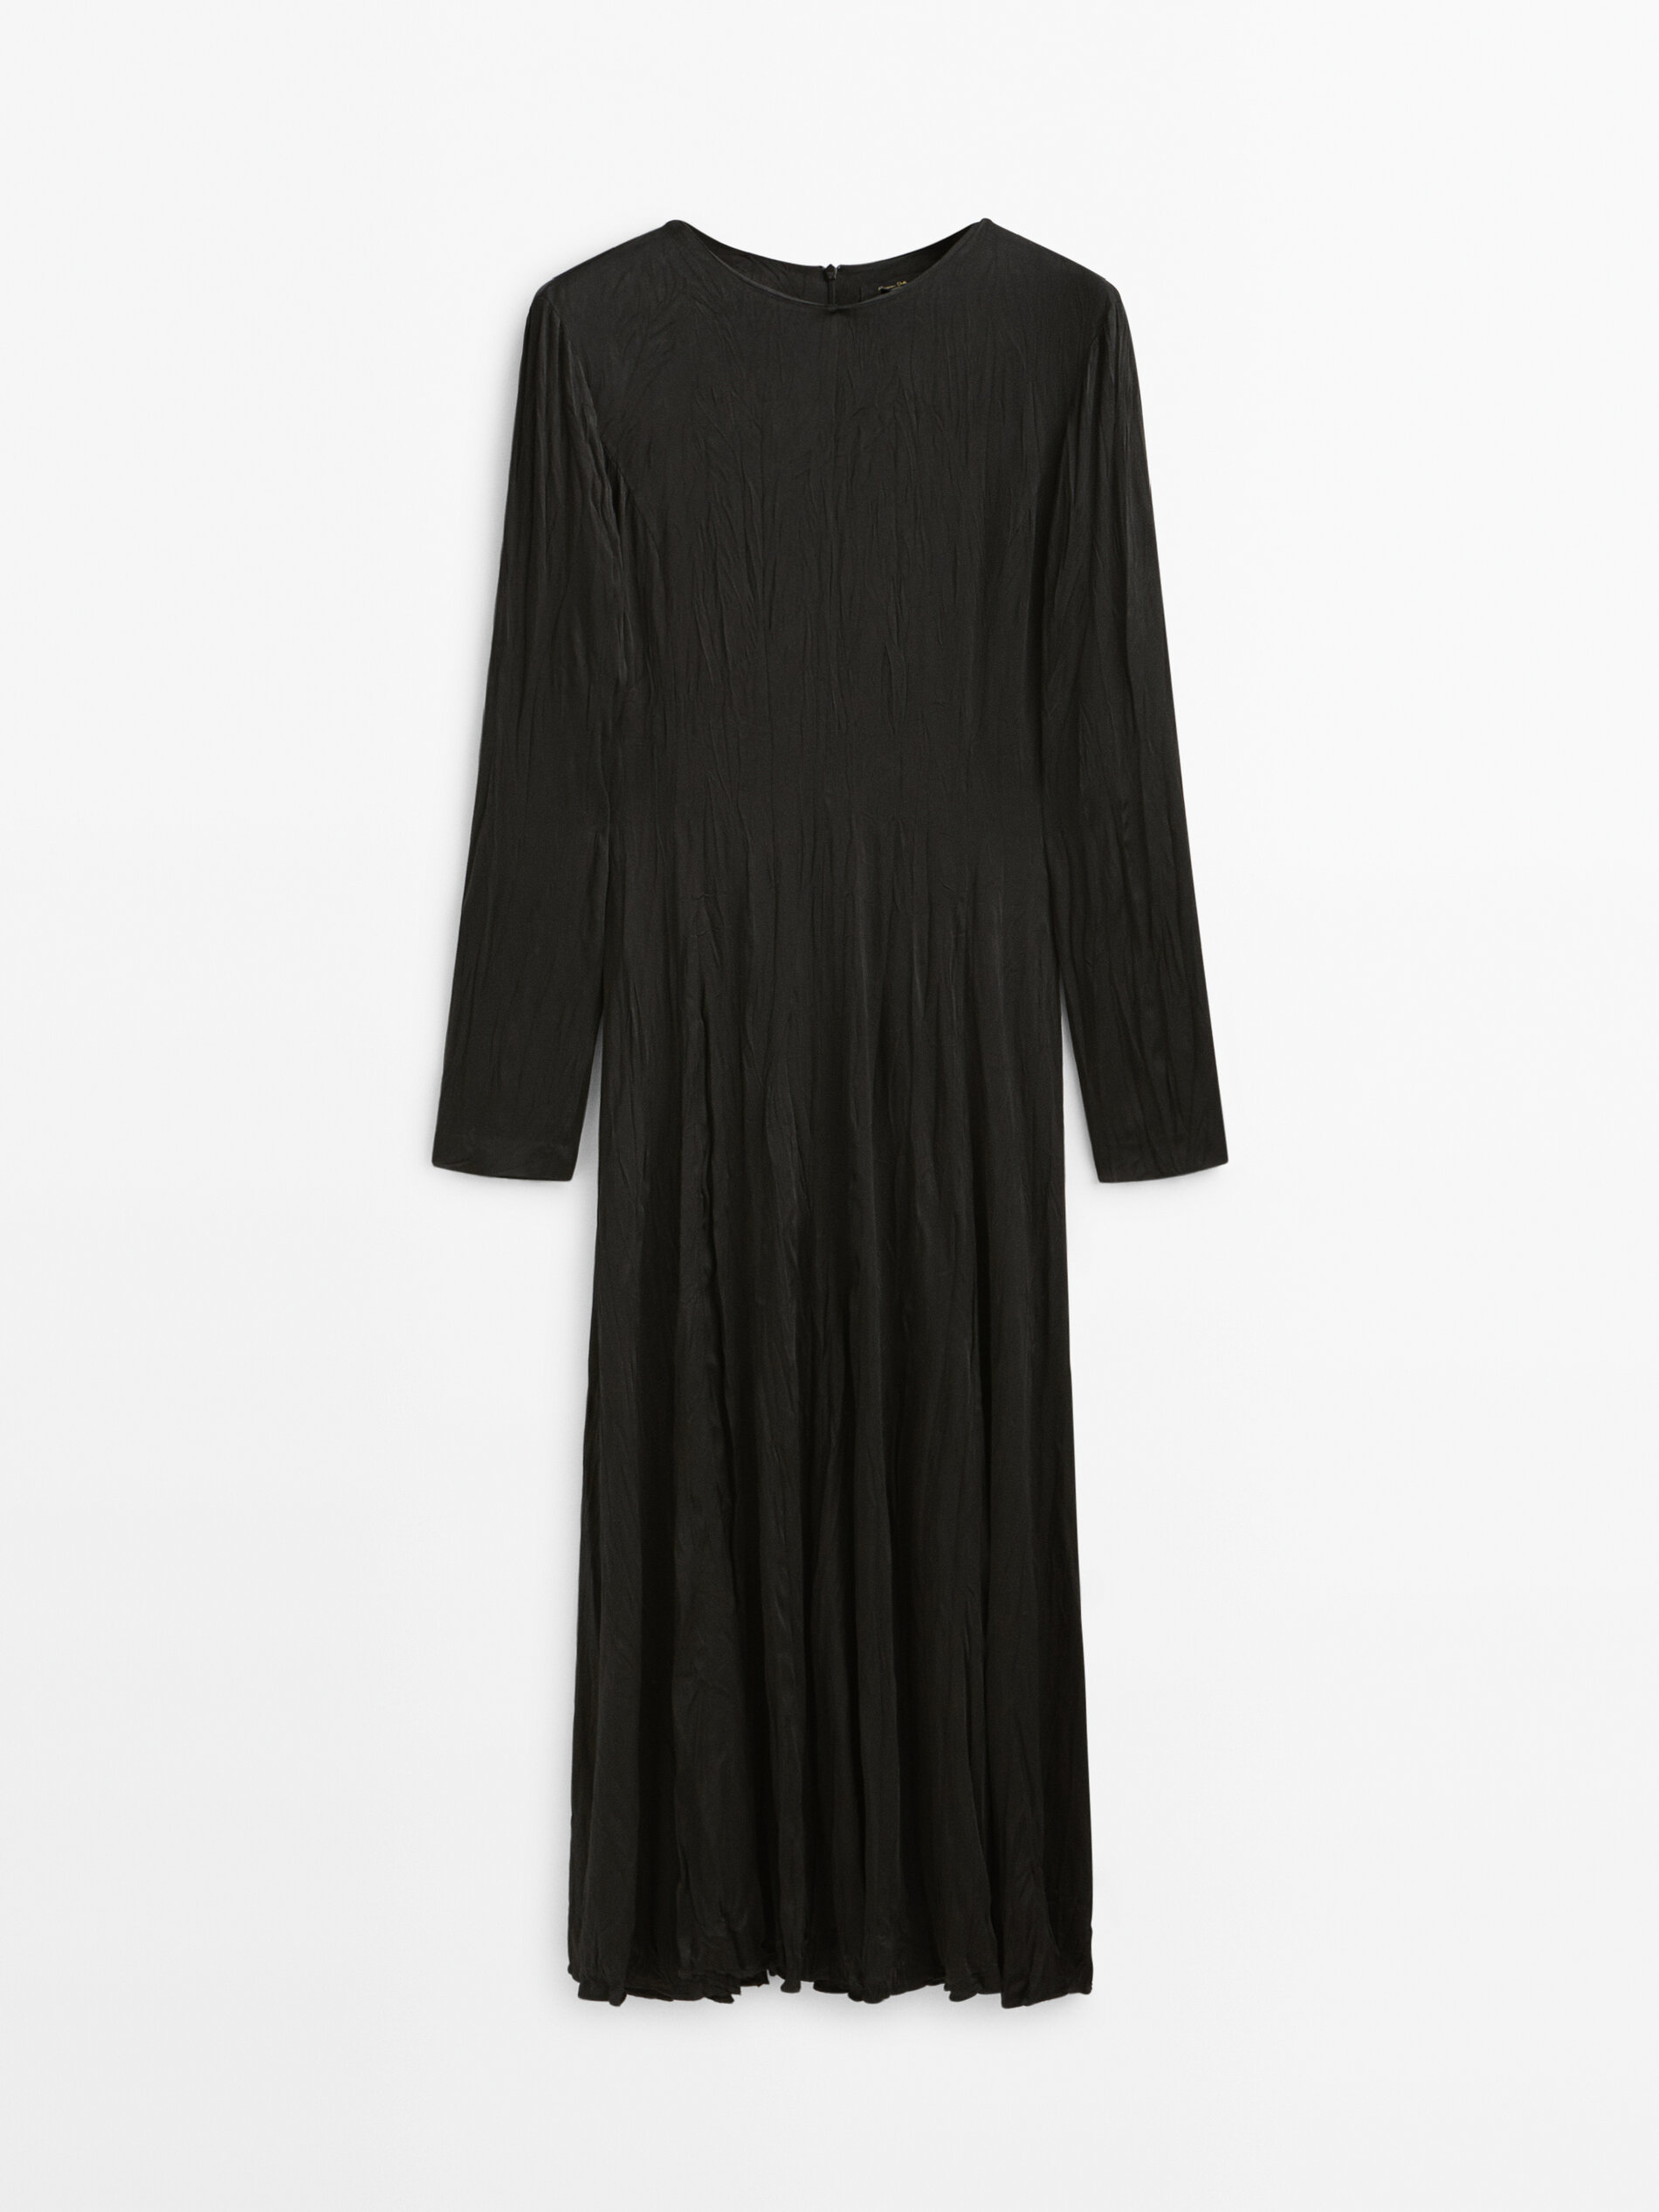 Vestido negro plisado de Massimo Dutti (199 euros).